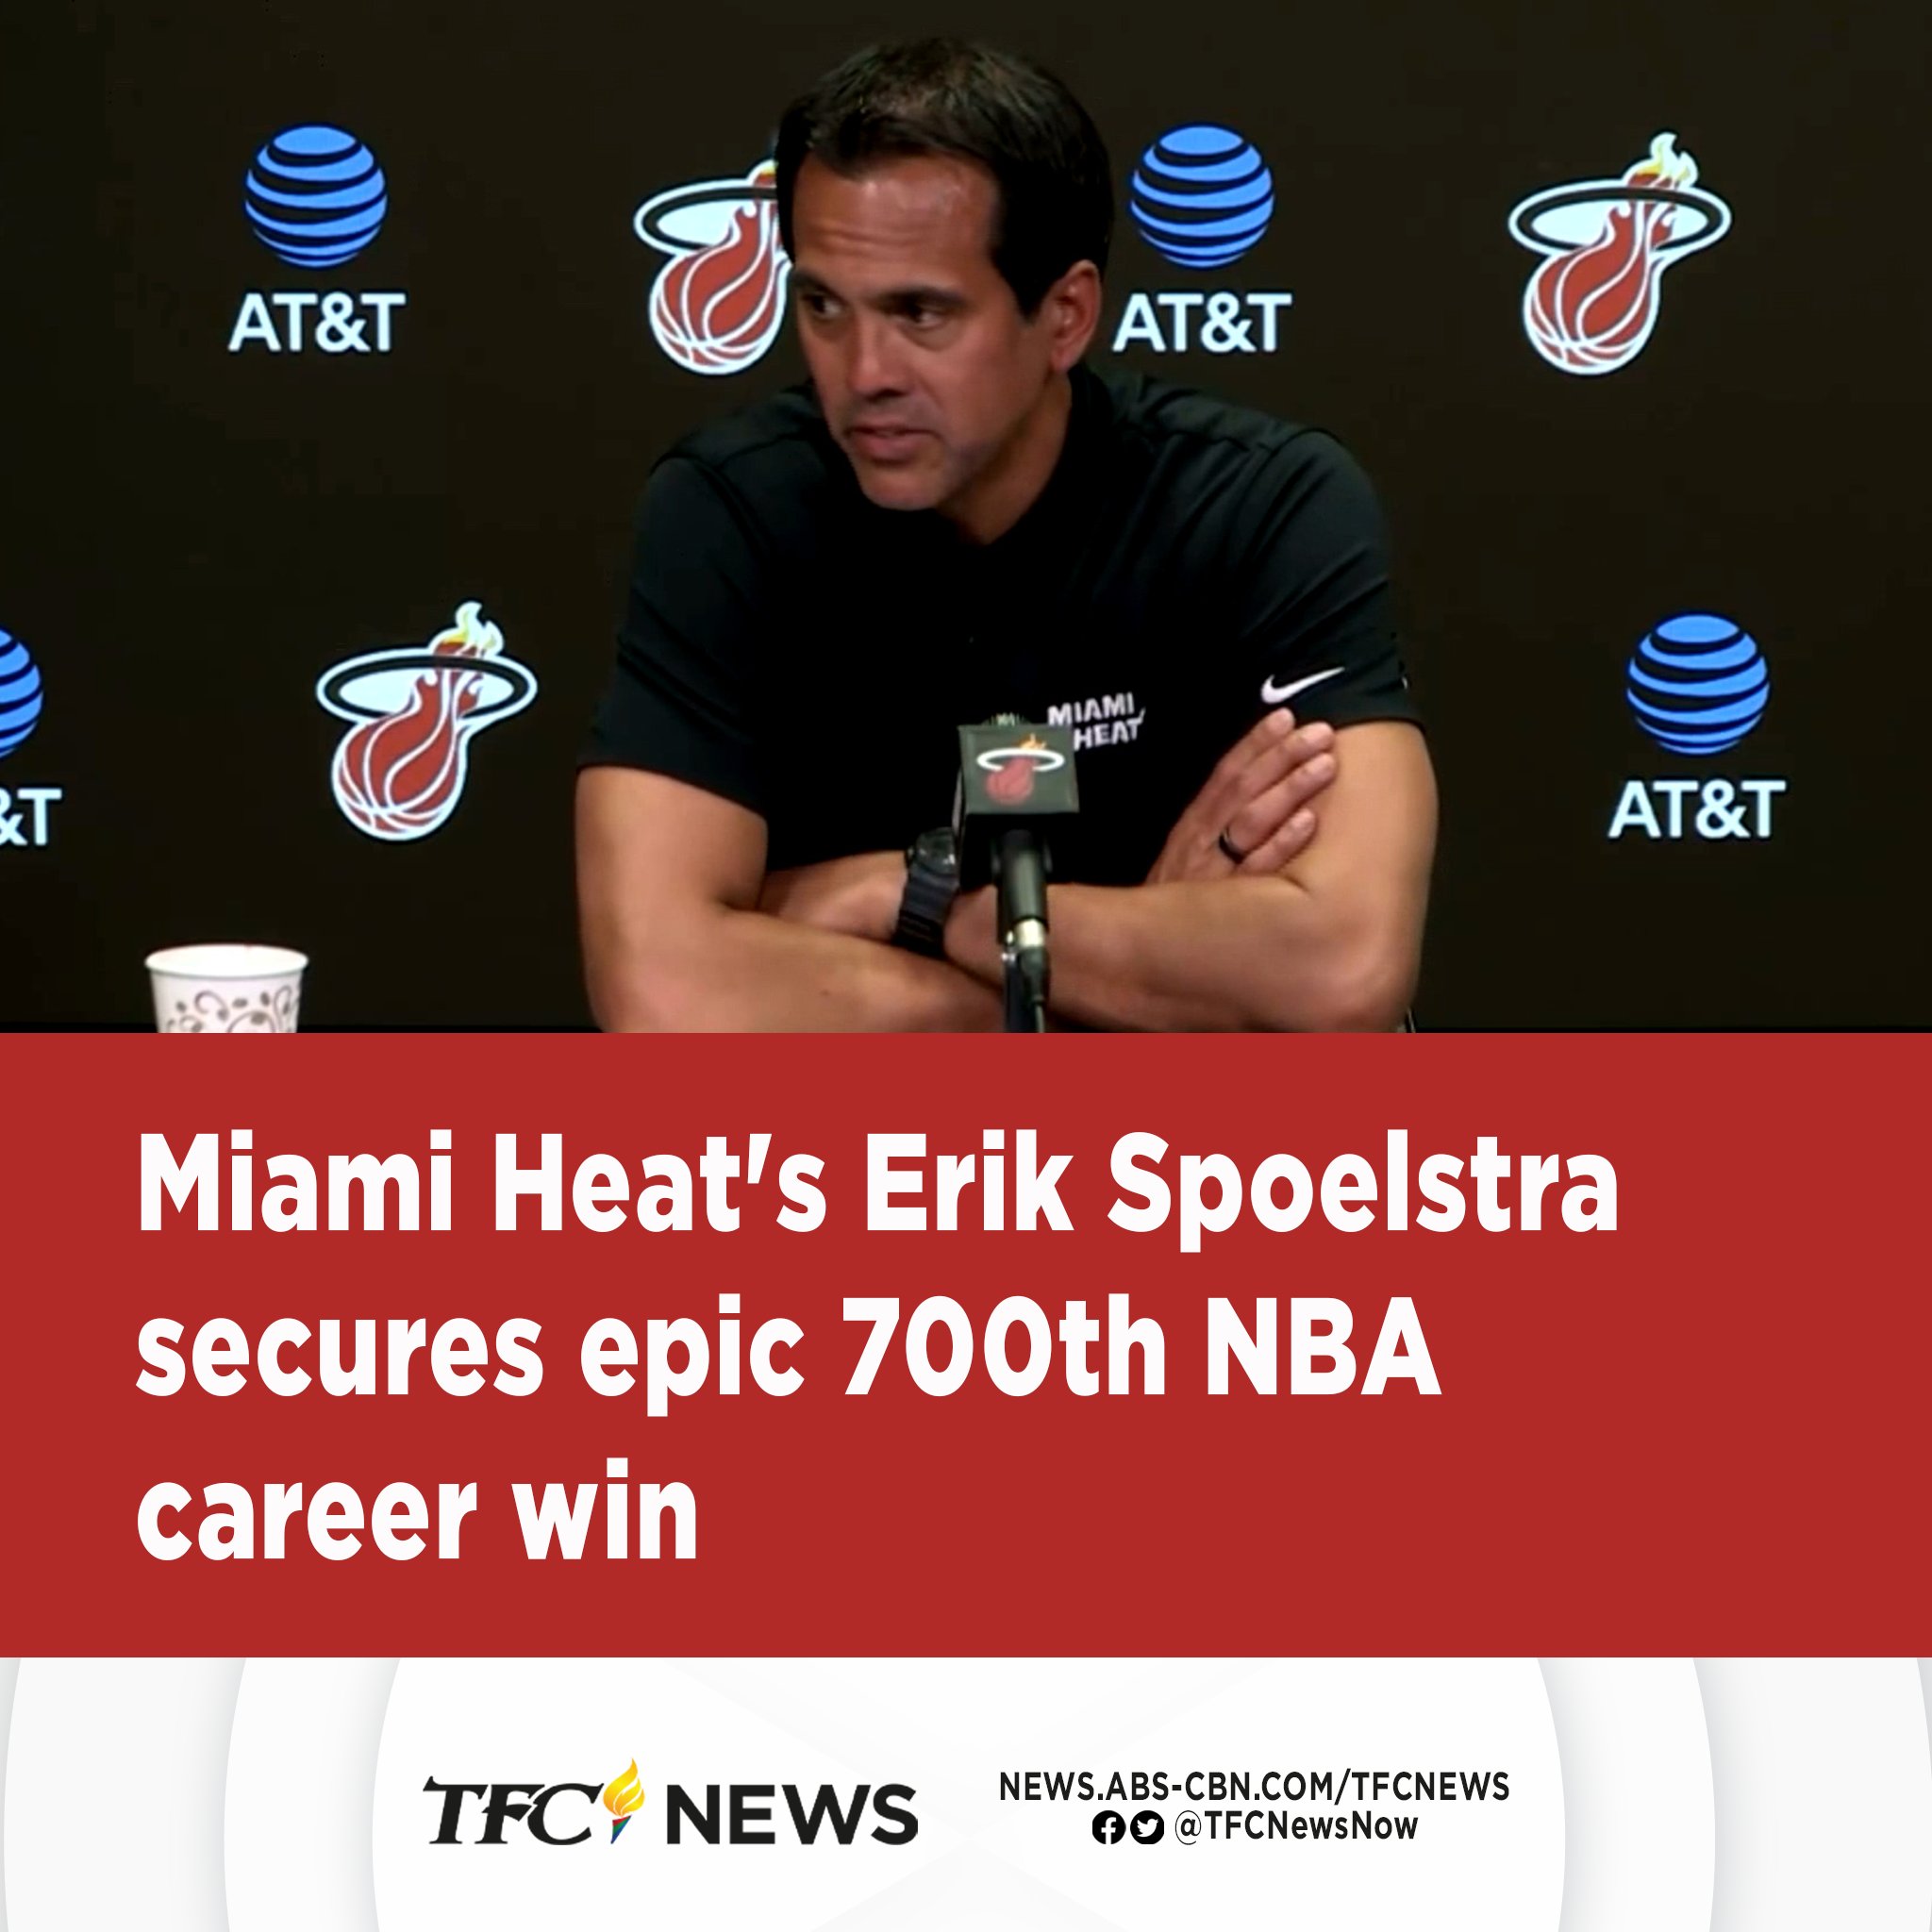 Erik Spoelstra got his 700th career win with the Miami Heat